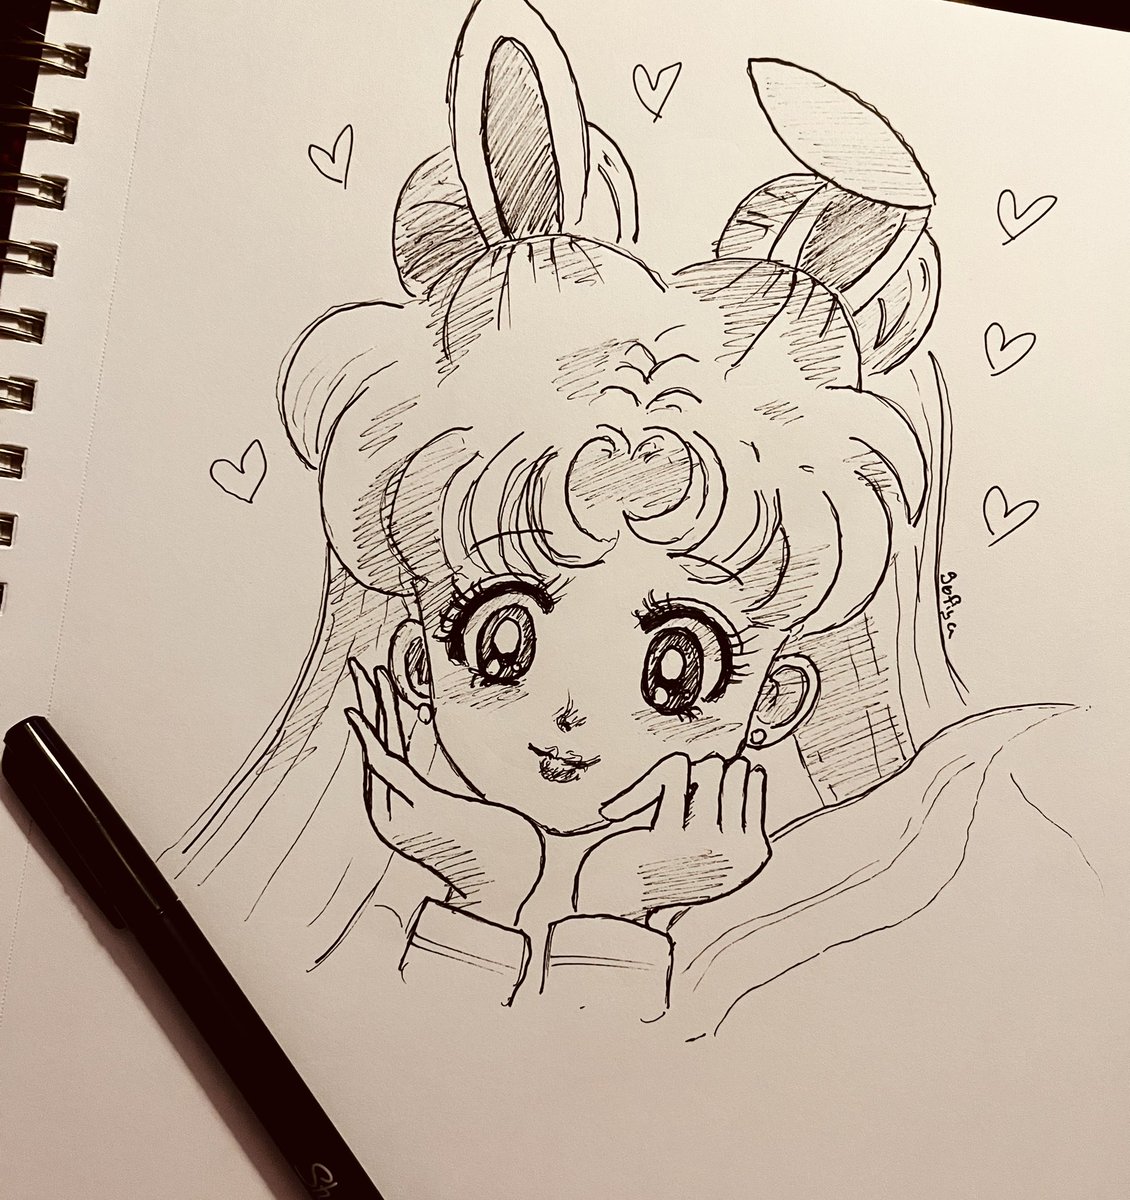 My Lunar New Year Pen Sketch! 🌙🐰 #YearOfTheRabbit (I’m late ~ sorry!)
#SailorMoon #LunarYear